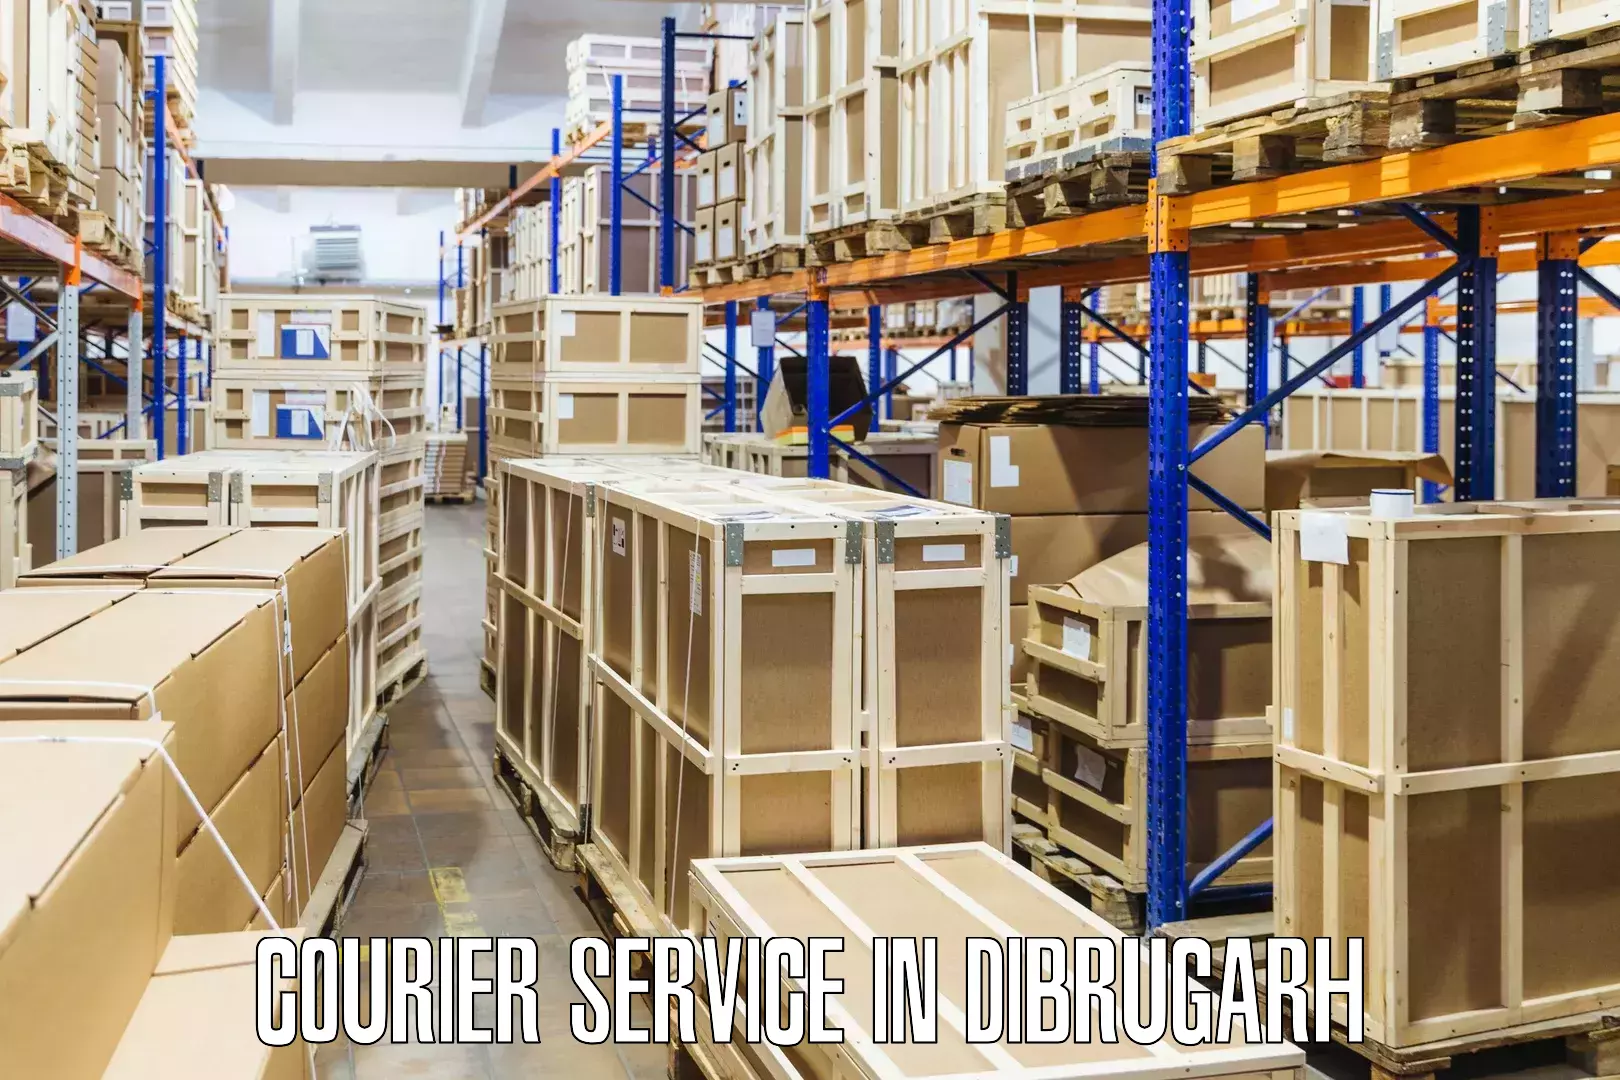 Overnight delivery services in Dibrugarh